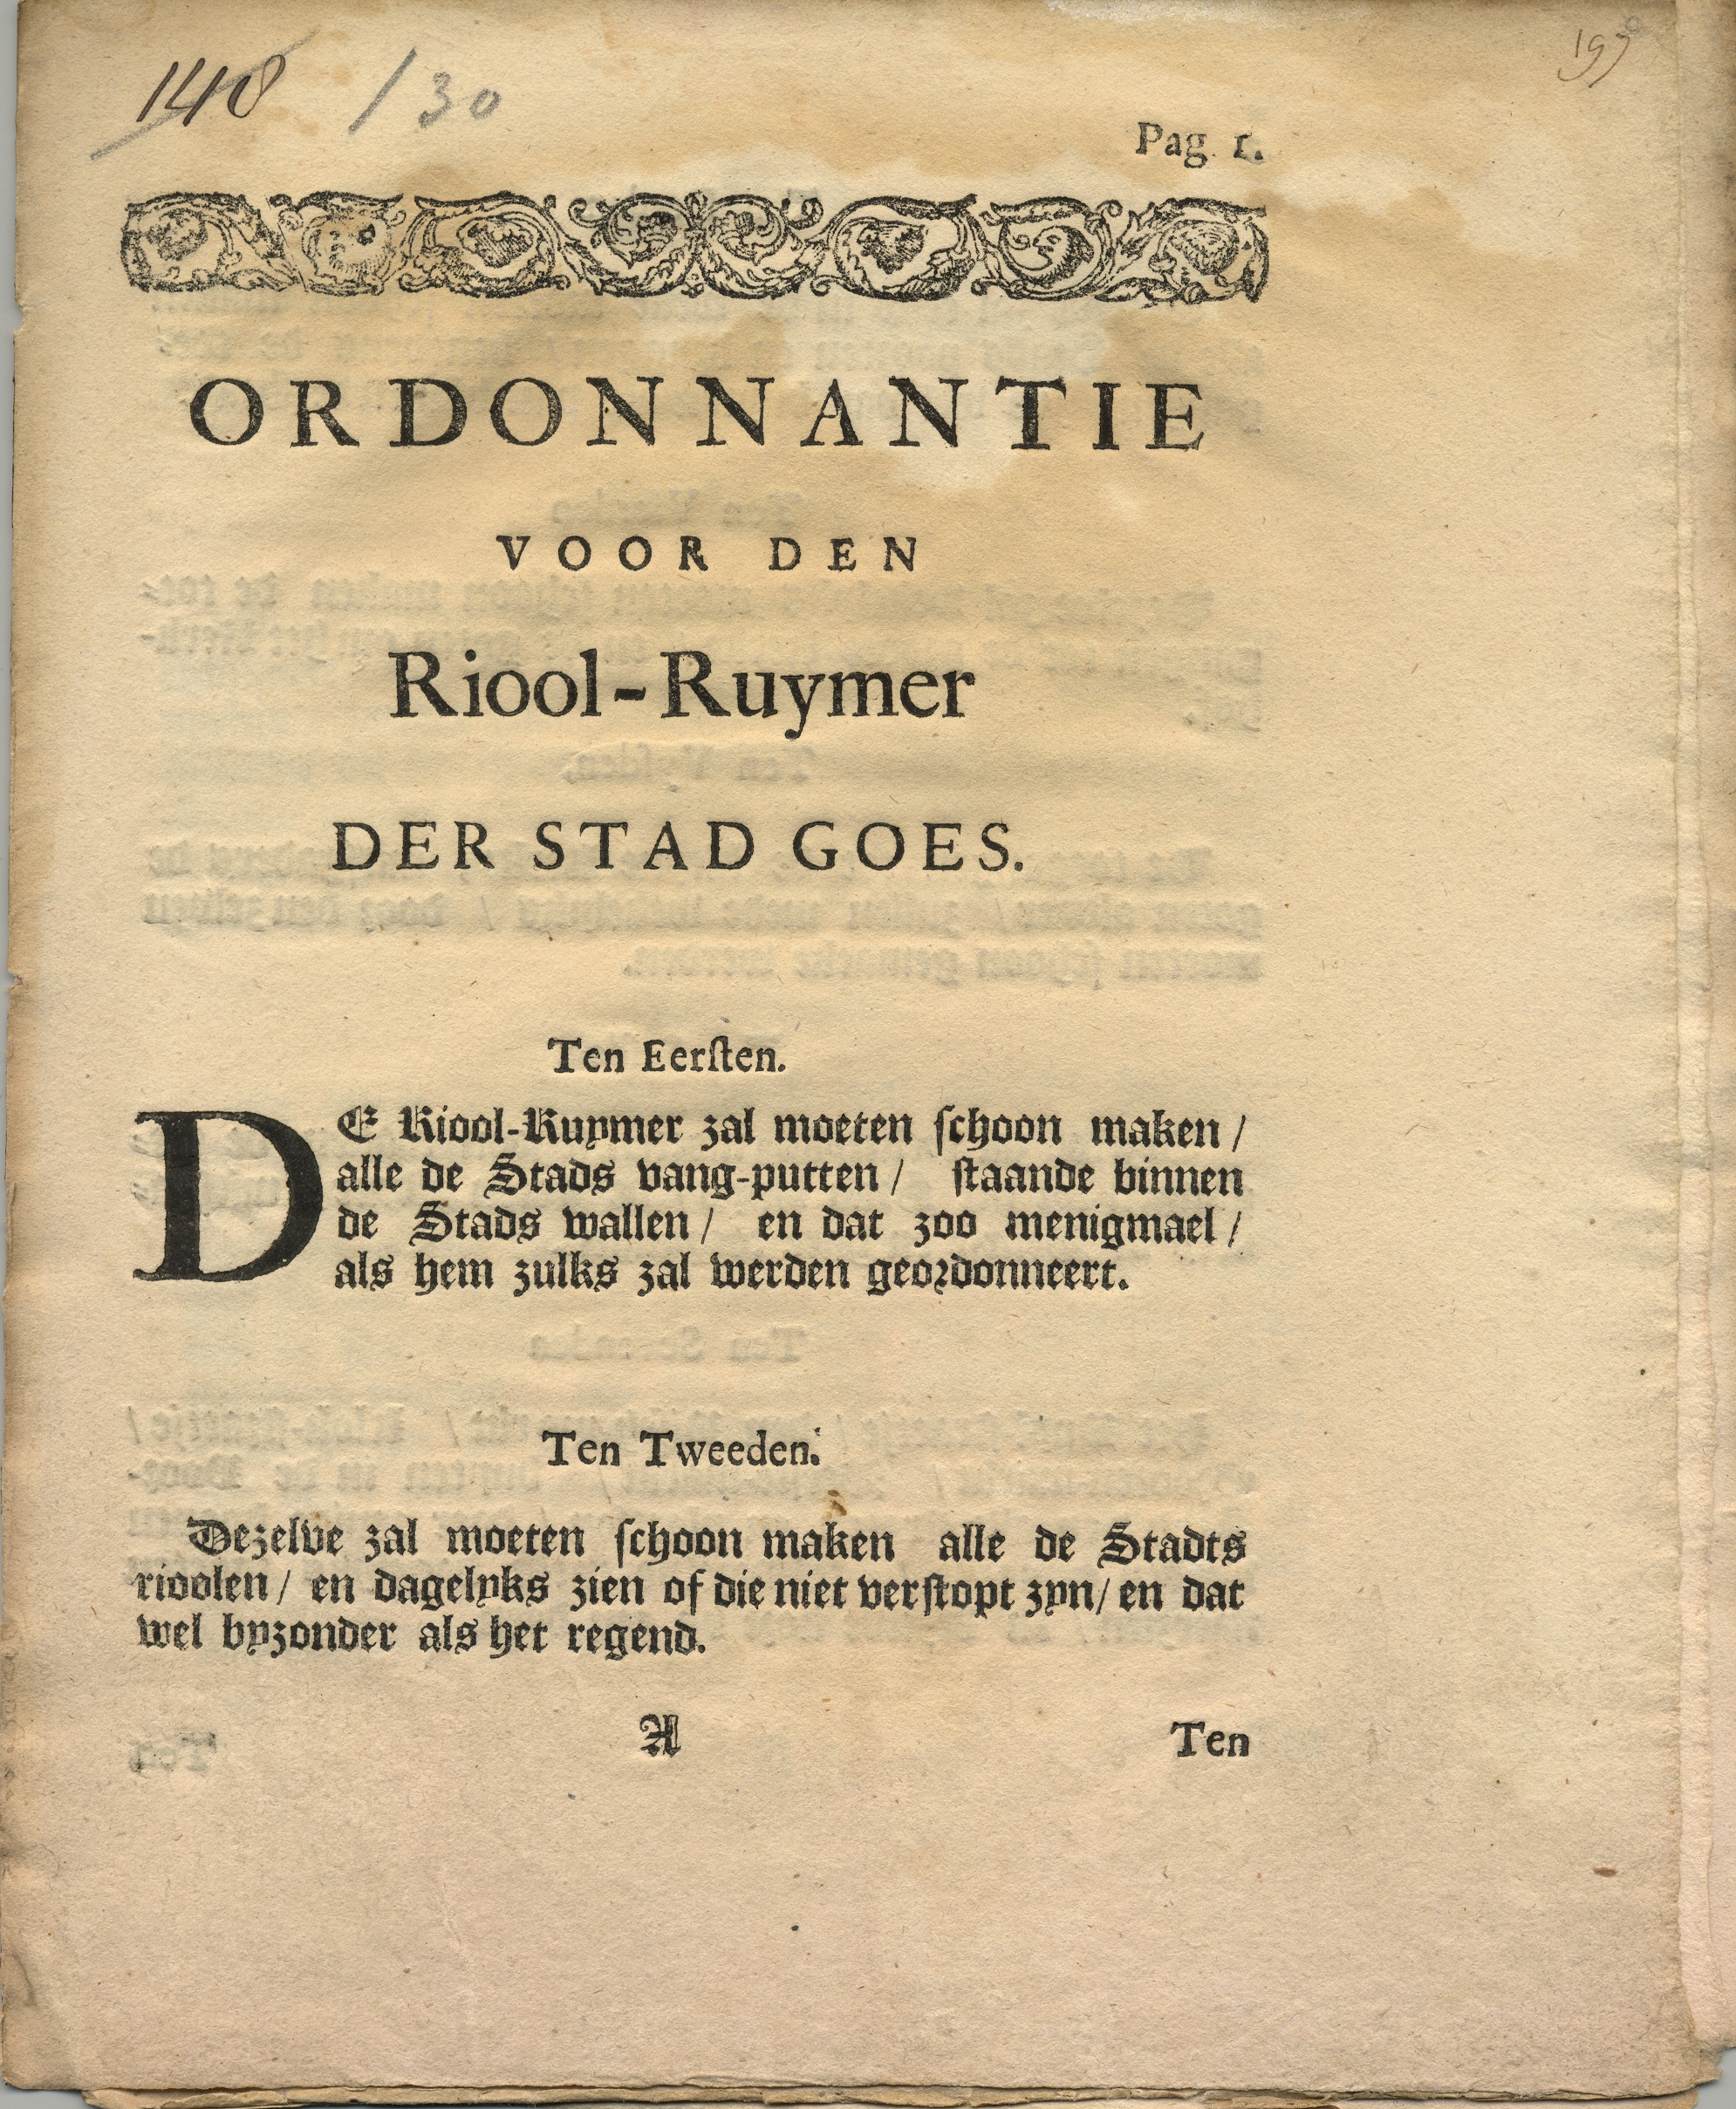 Ordonnantie voor de riool-ruymer, 1719.